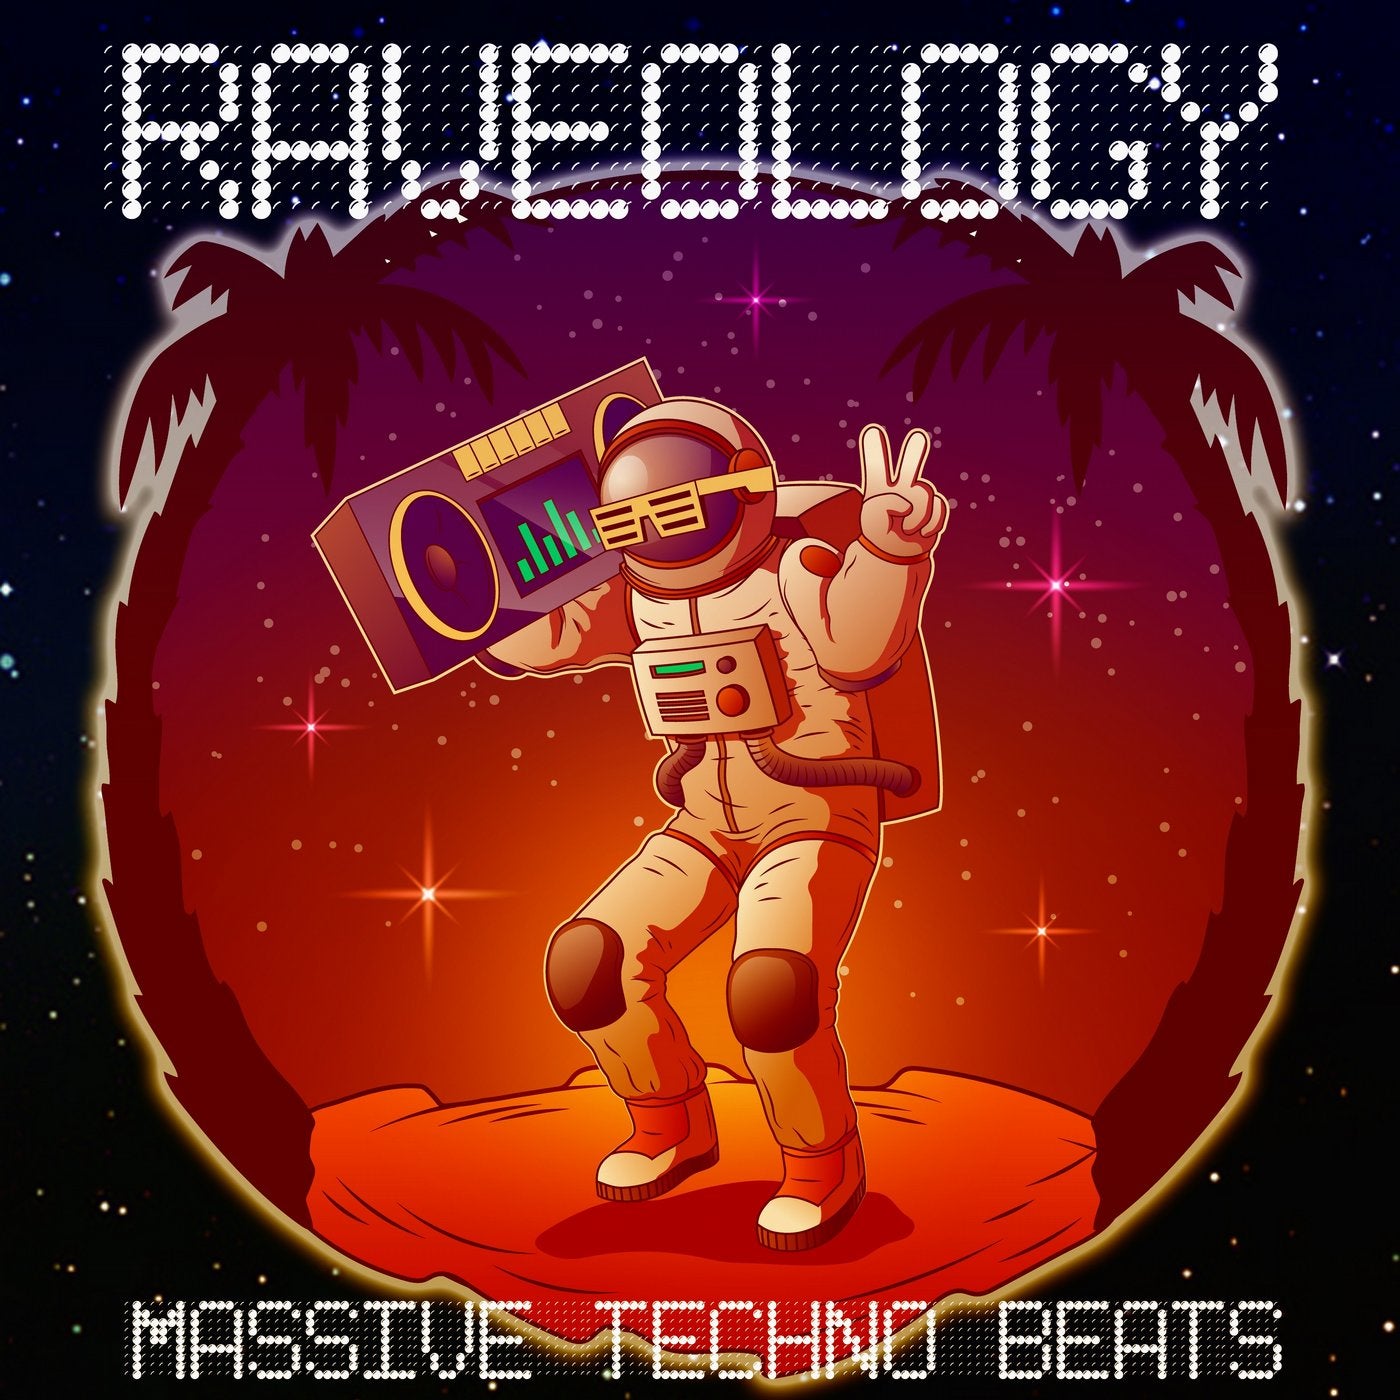 Raveology (Massive Techno Beats)